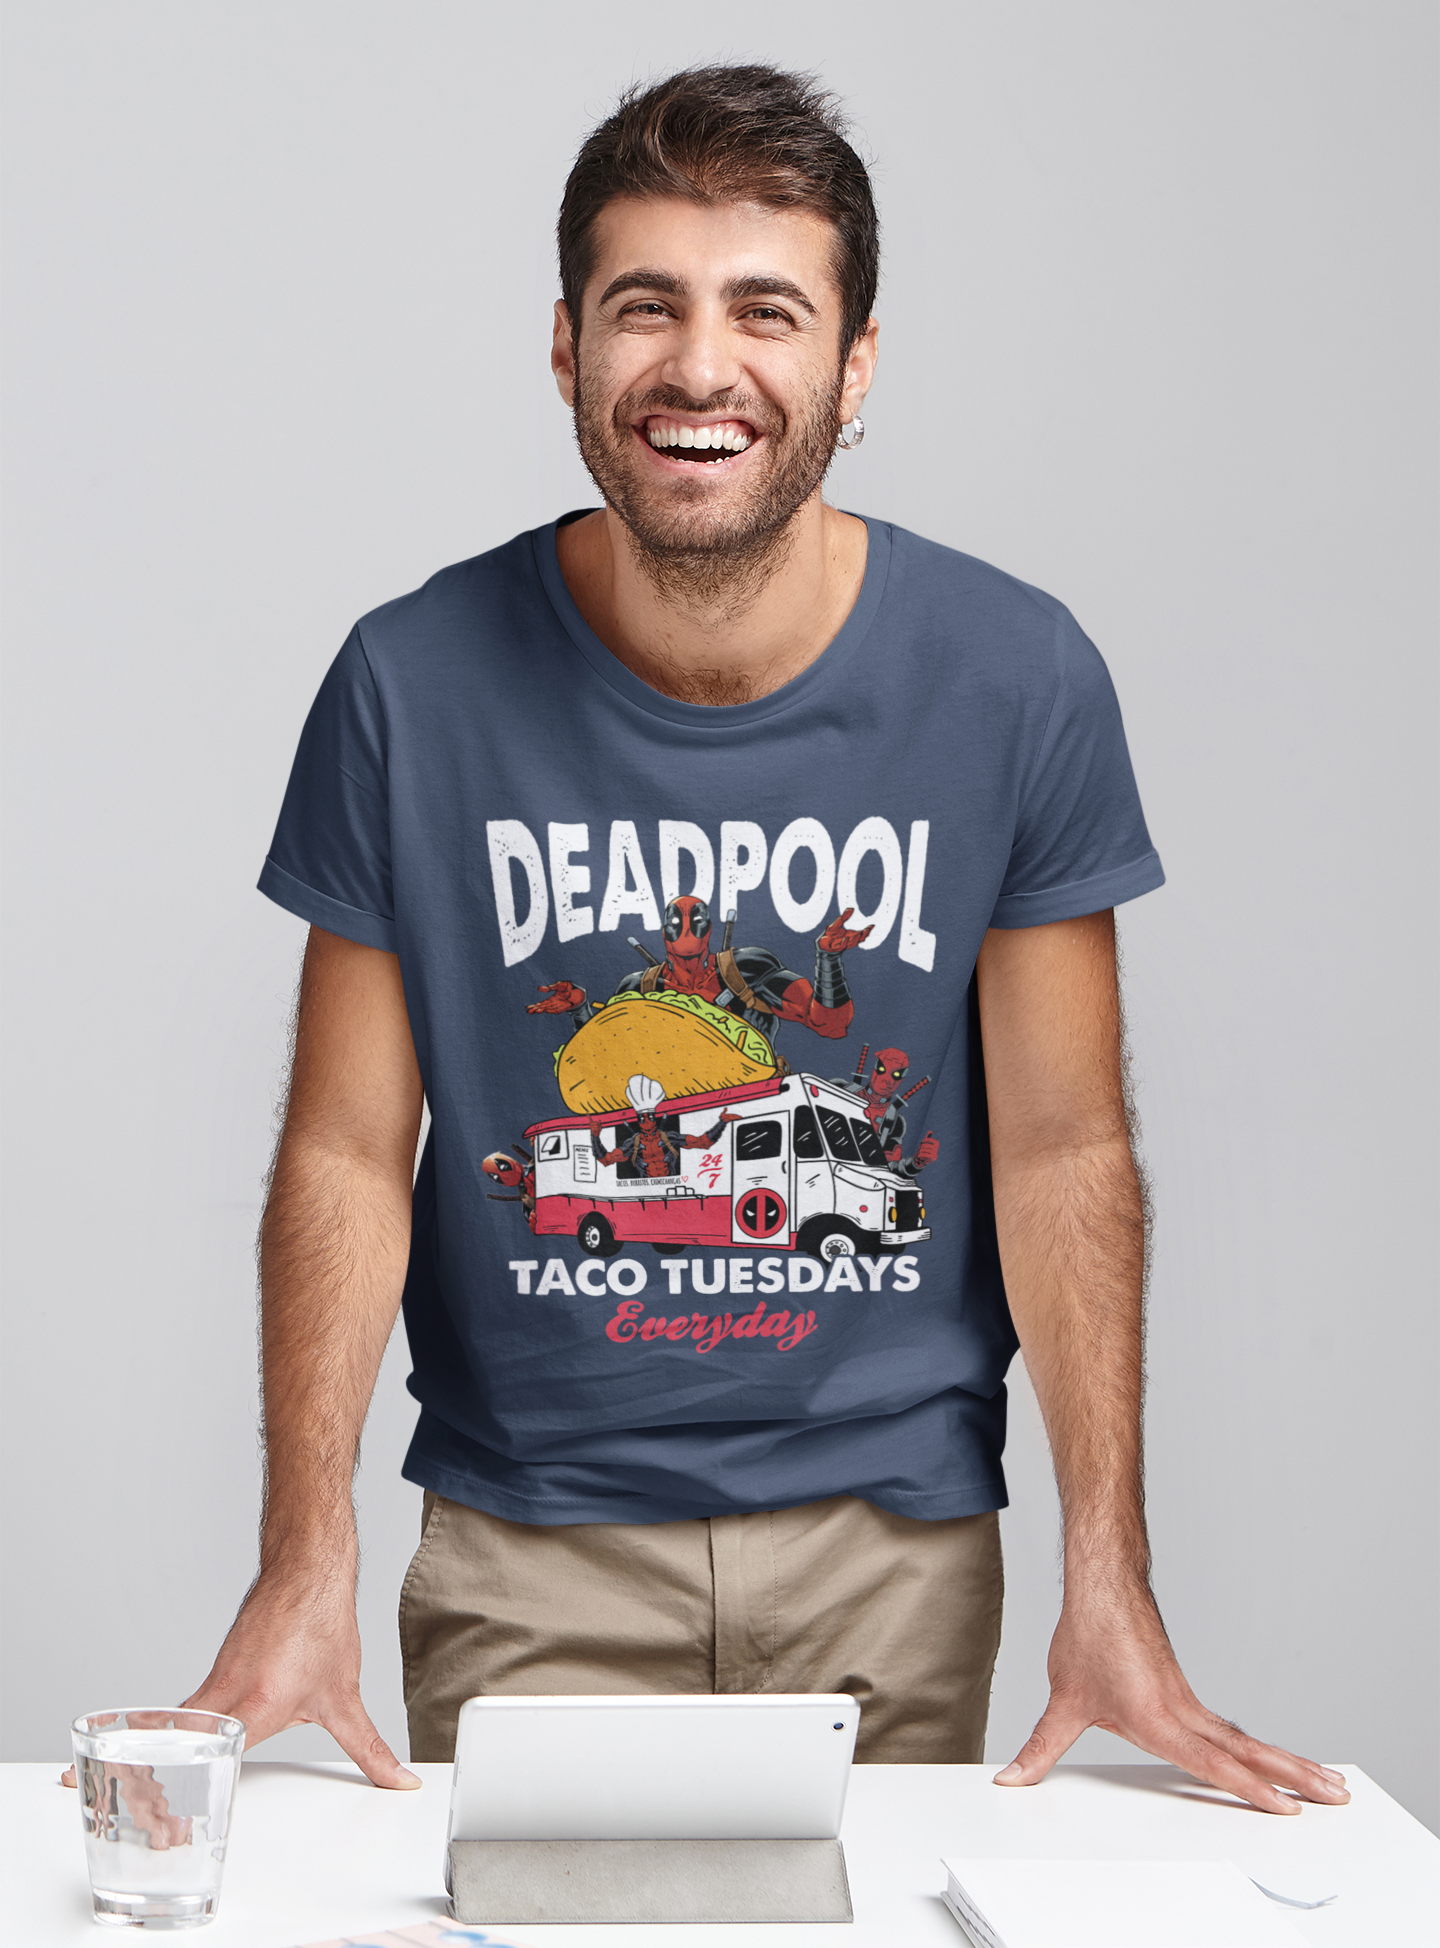 Deadpool T Shirt, Superhero Deadpool T Shirt, Taco Tuesdays Everyday Tshirt